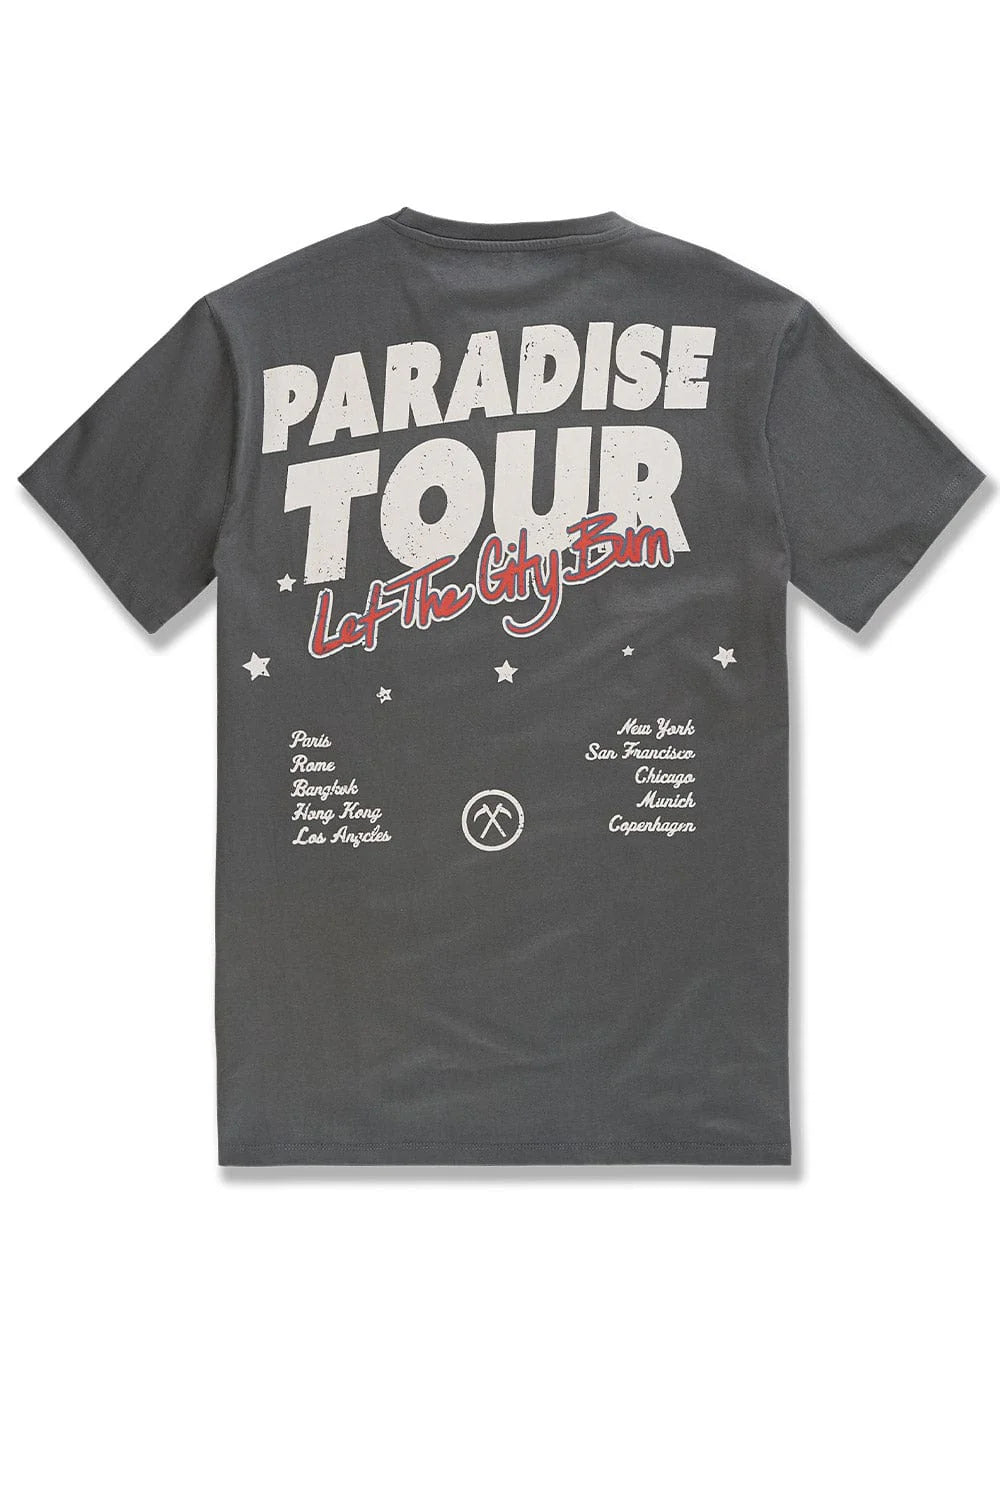 Jordan Craig -Paradise Tour T-Shirt -Charcoal